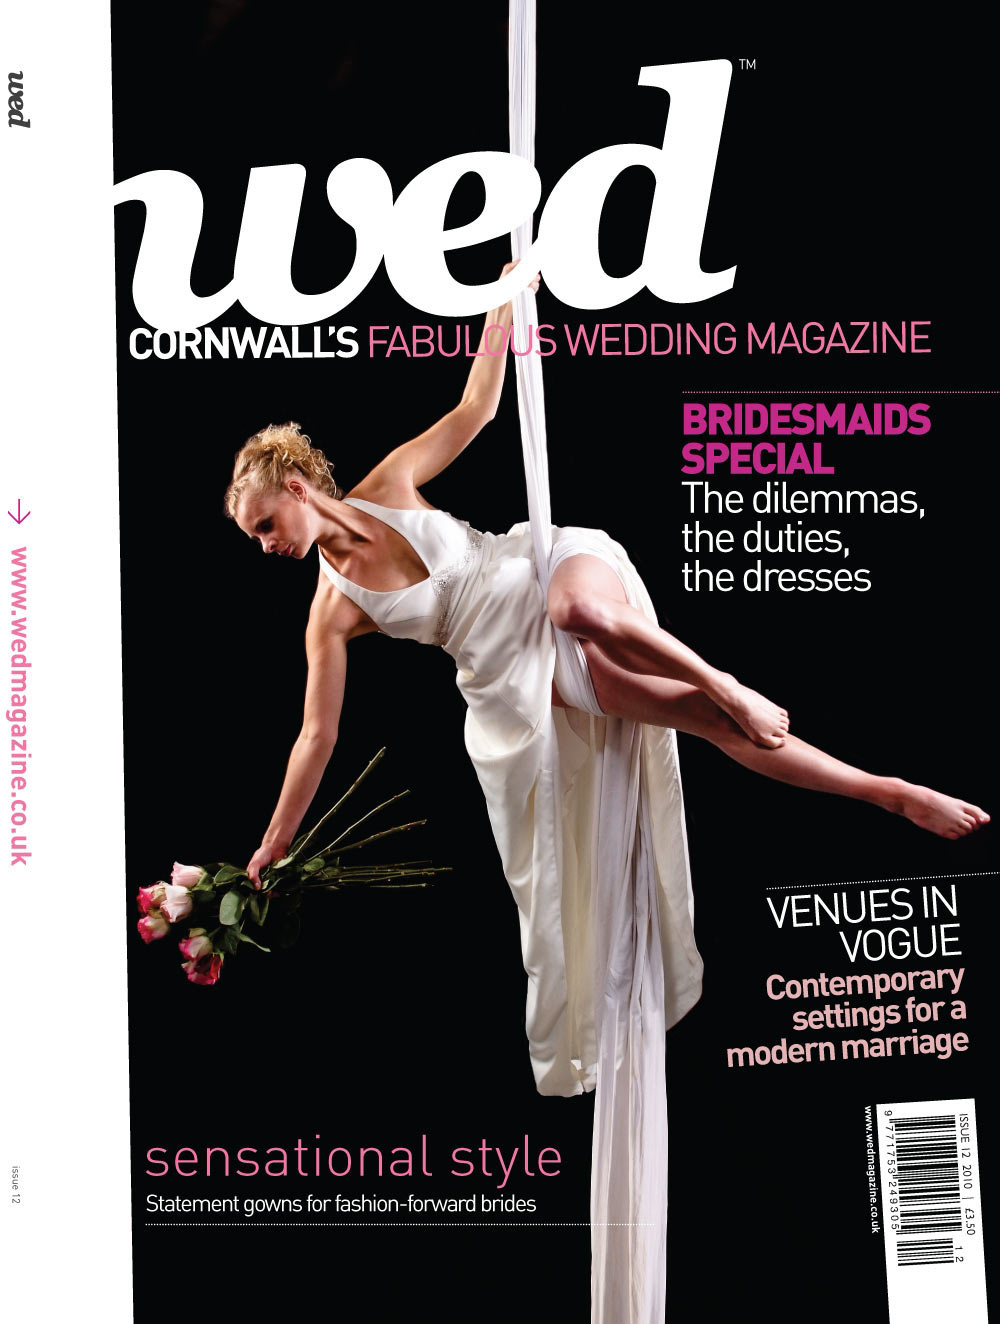 Cornwall Wed Magazine - issue 12